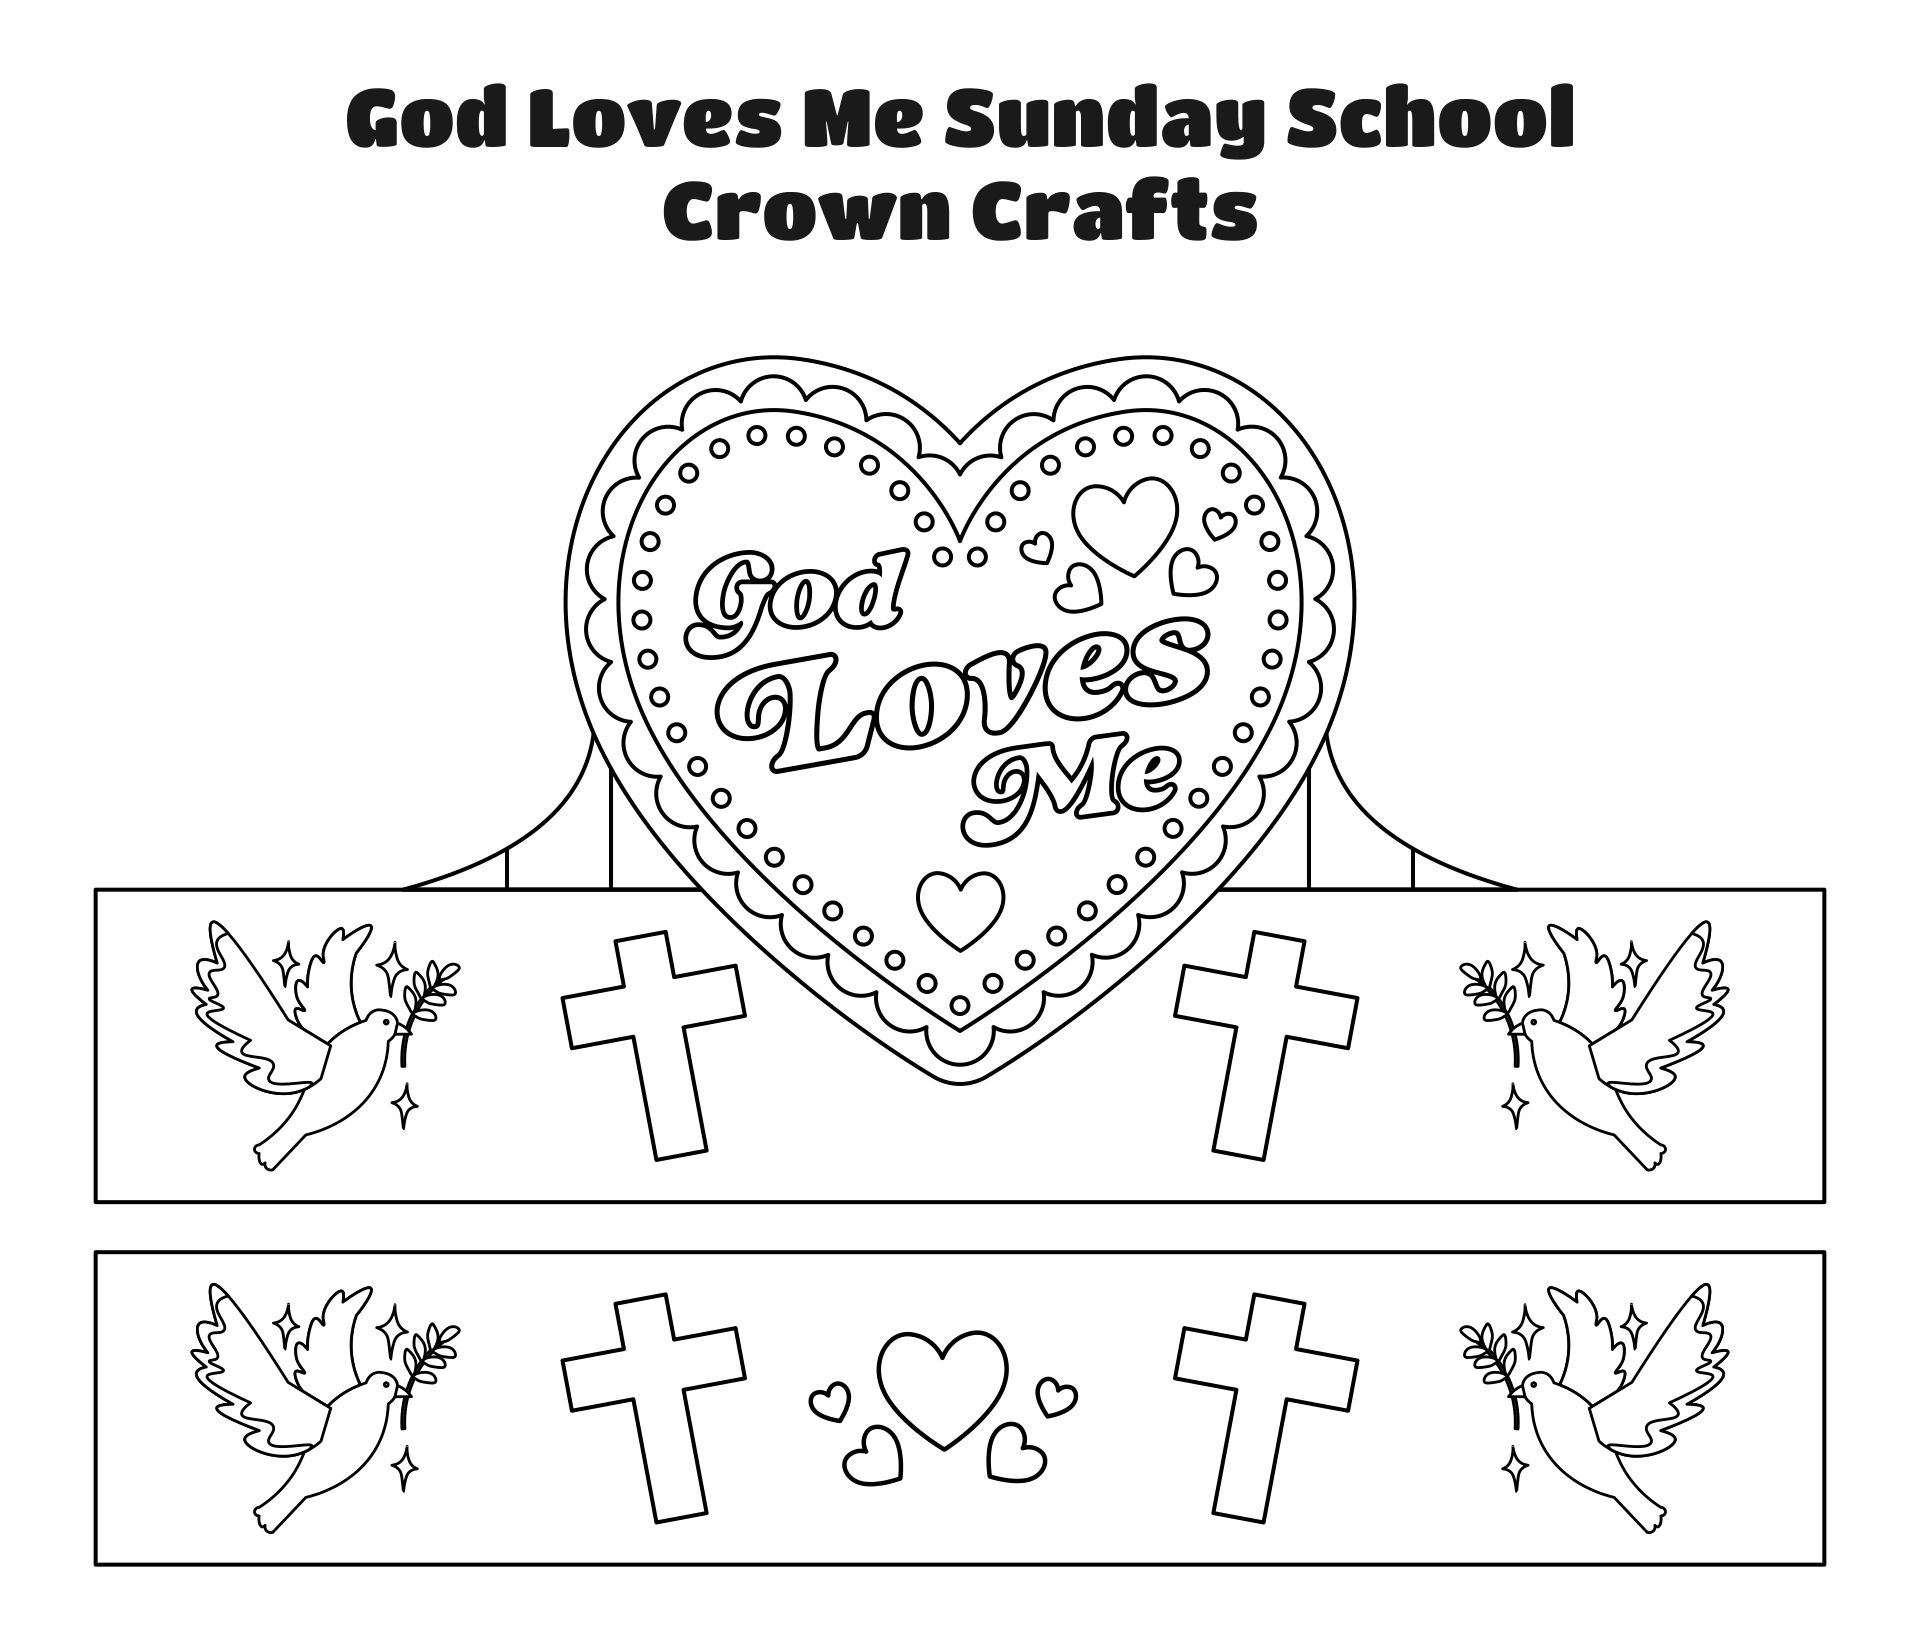 God Loves Me Sunday School Crafts